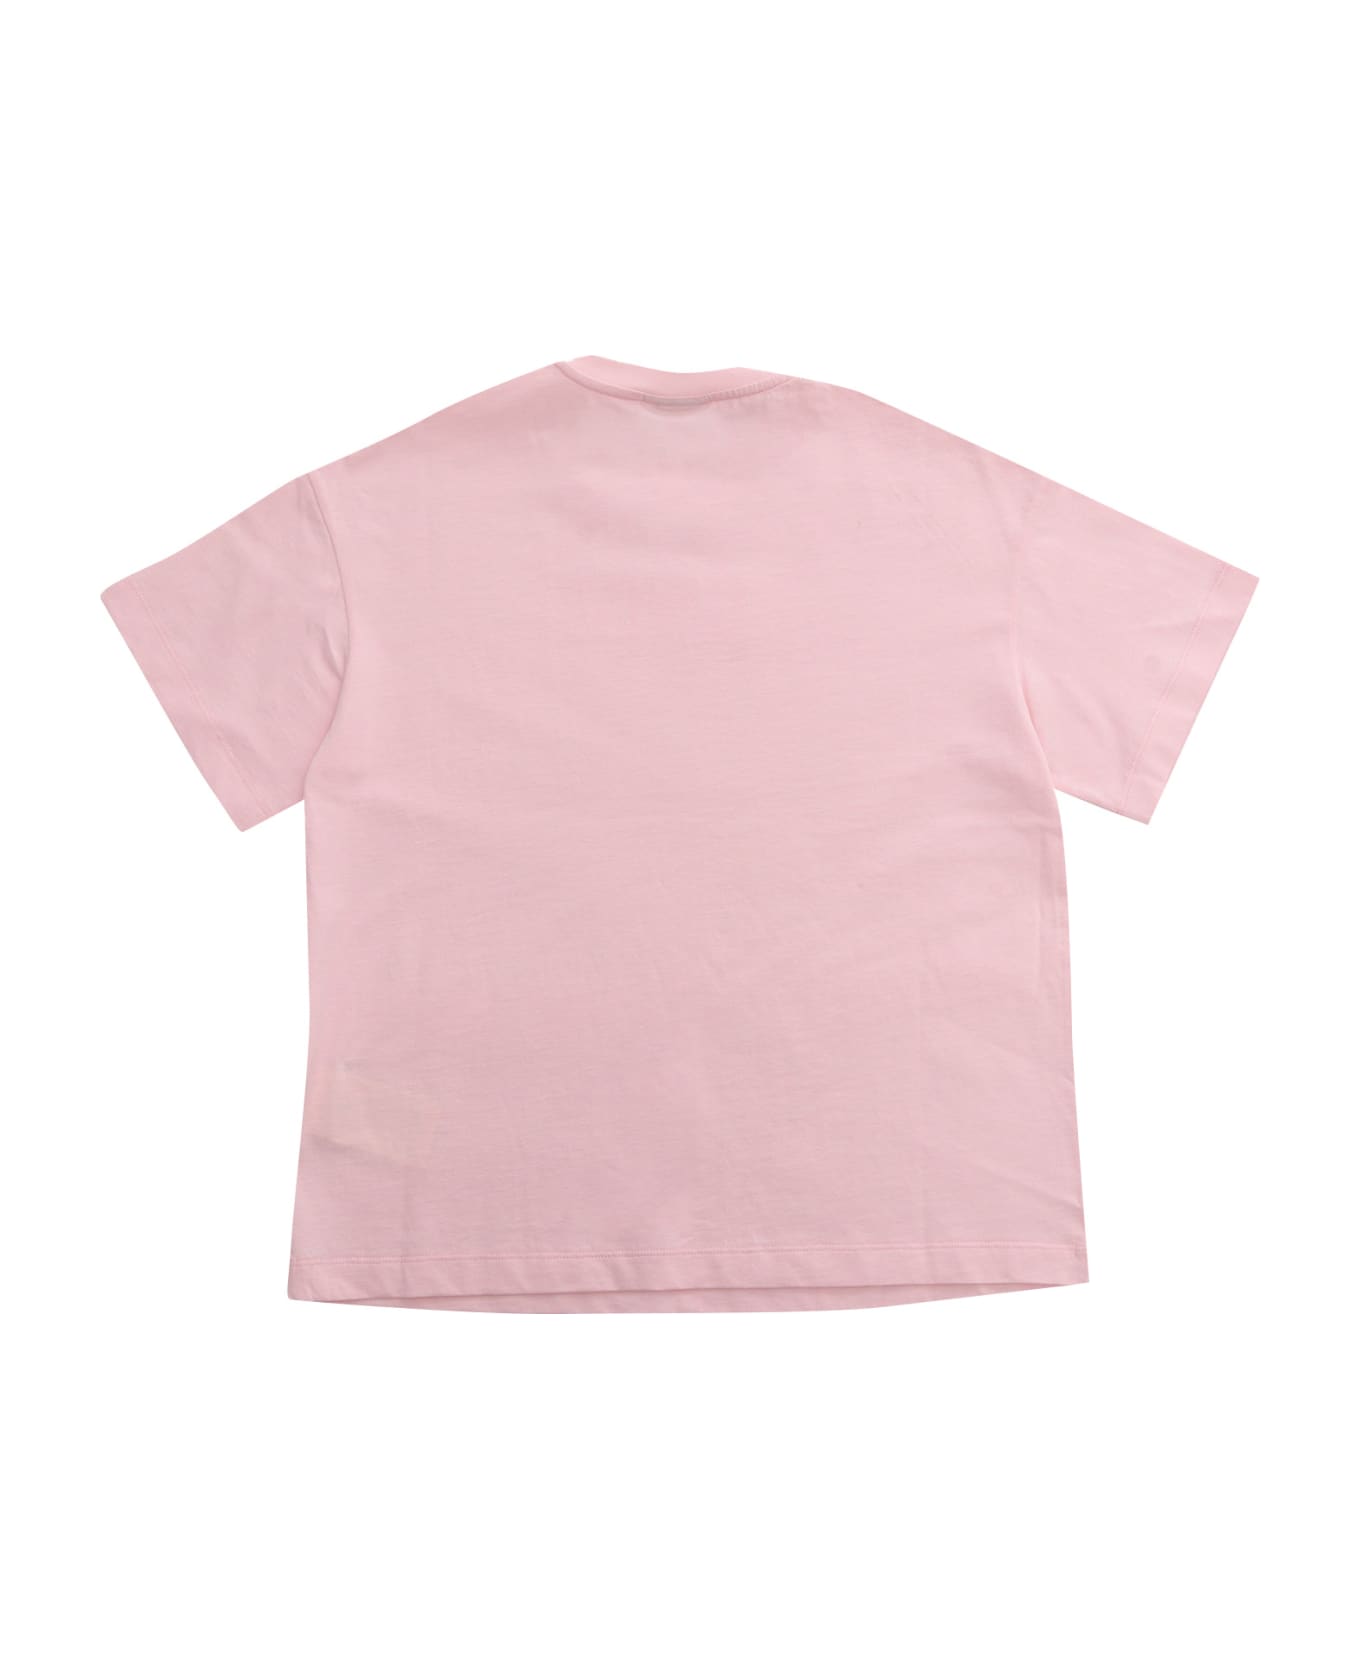 Fendi Pink Fendi T-shirt - PINK